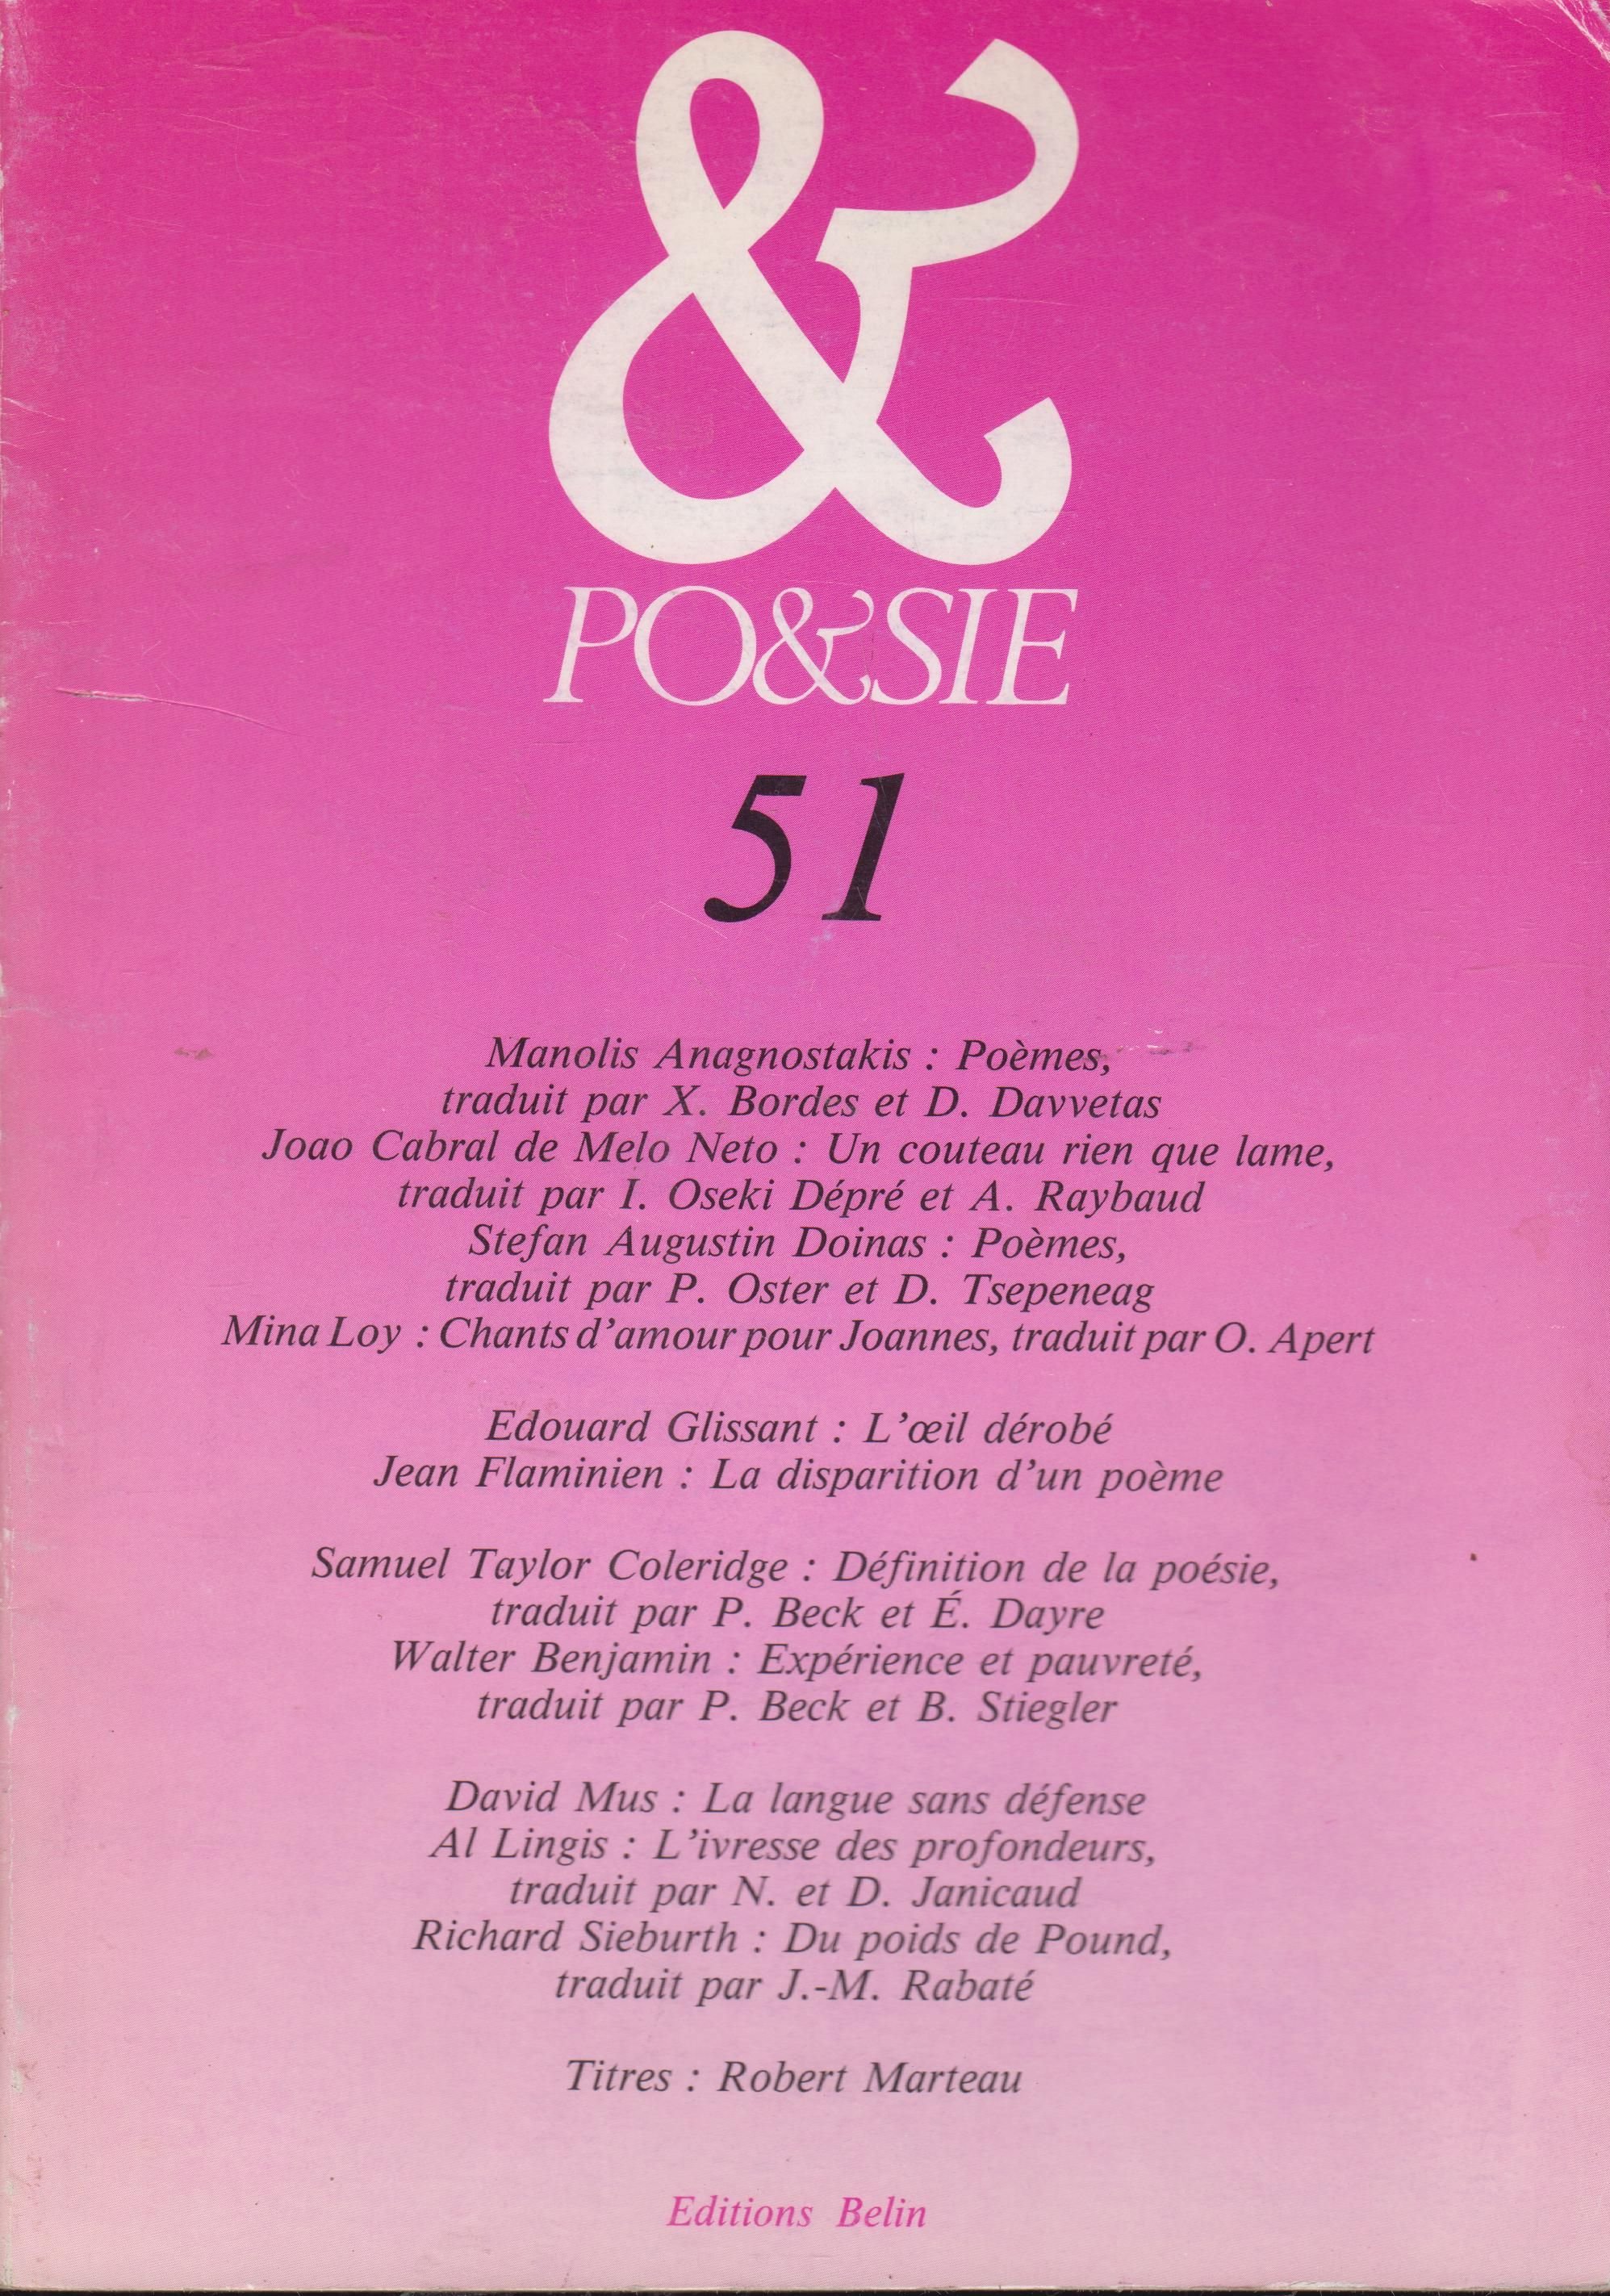 Poesie 51 by Cabral de Melo Neto & Mina Loy & Edouard Glissant & Coleridge  & Walter Benjamin David Mus & Richard Sieburth: Très bon Couverture souple  (1989) Edition originale